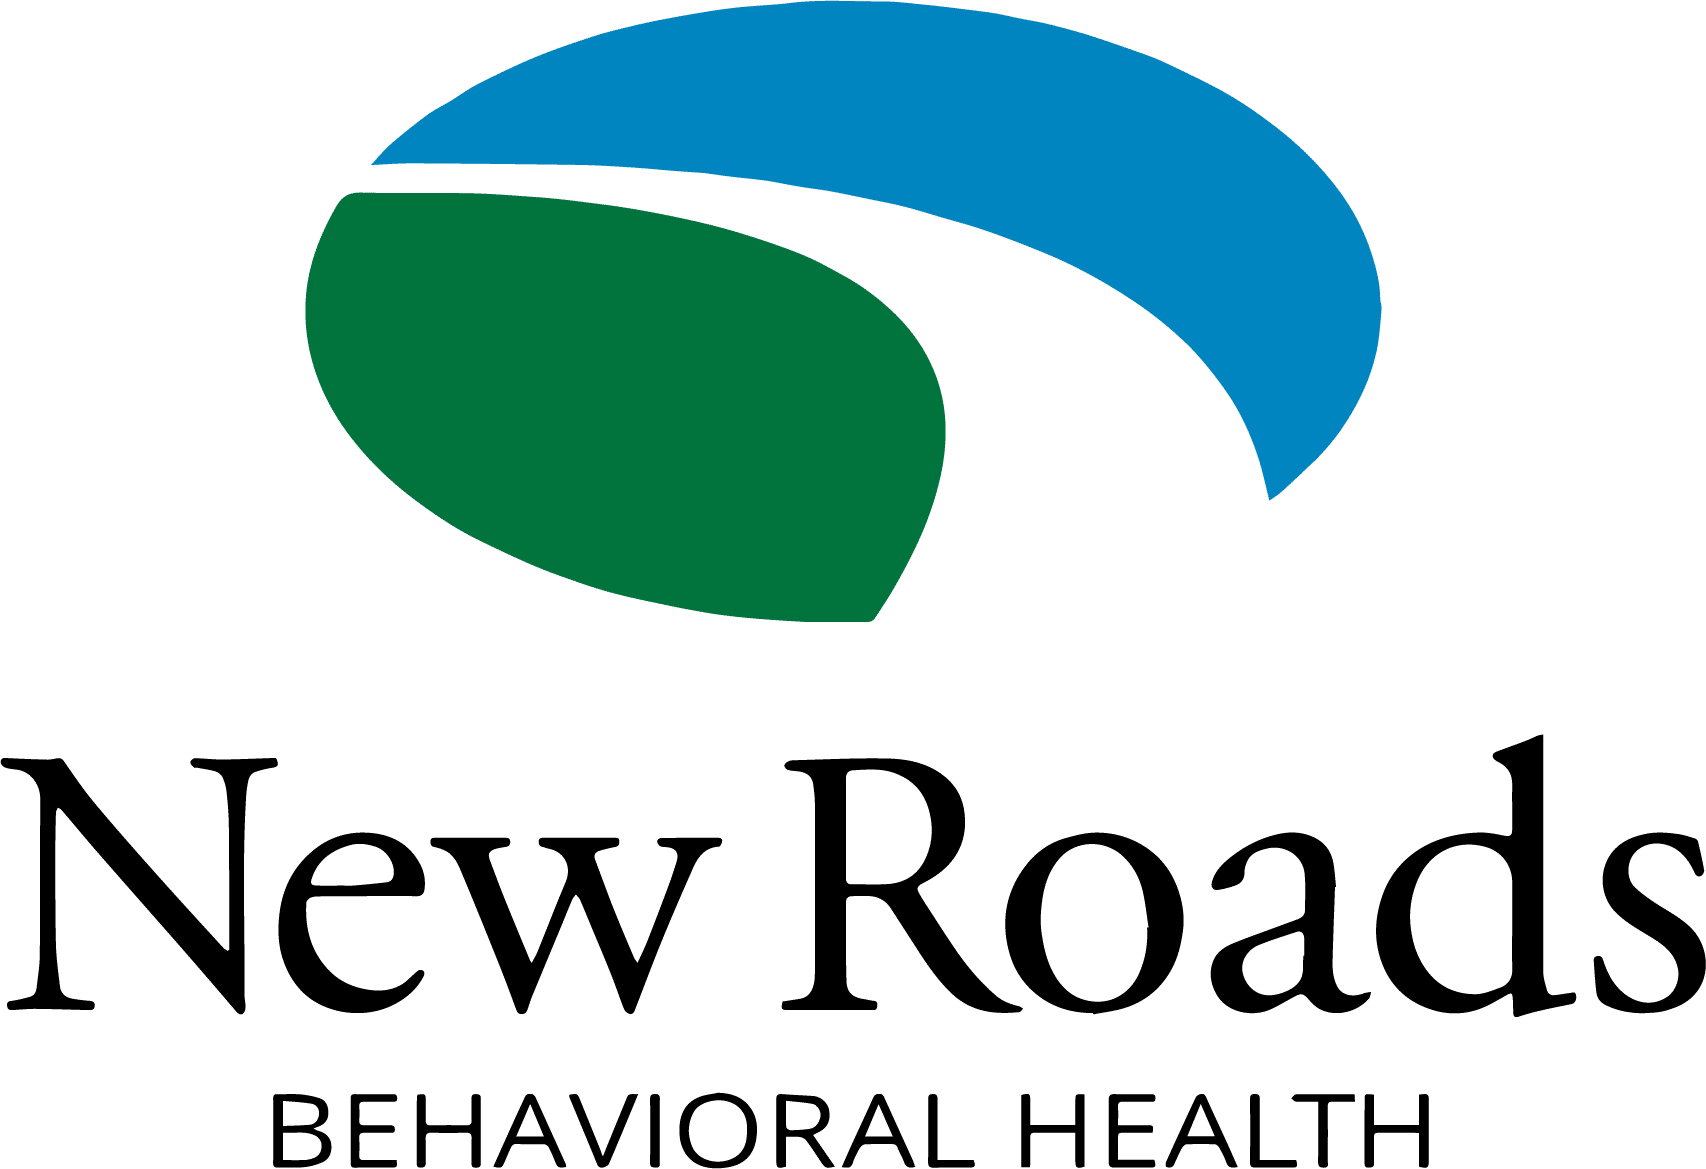 New Roads Behavioral Health | Mental Health Help: Finding a Community